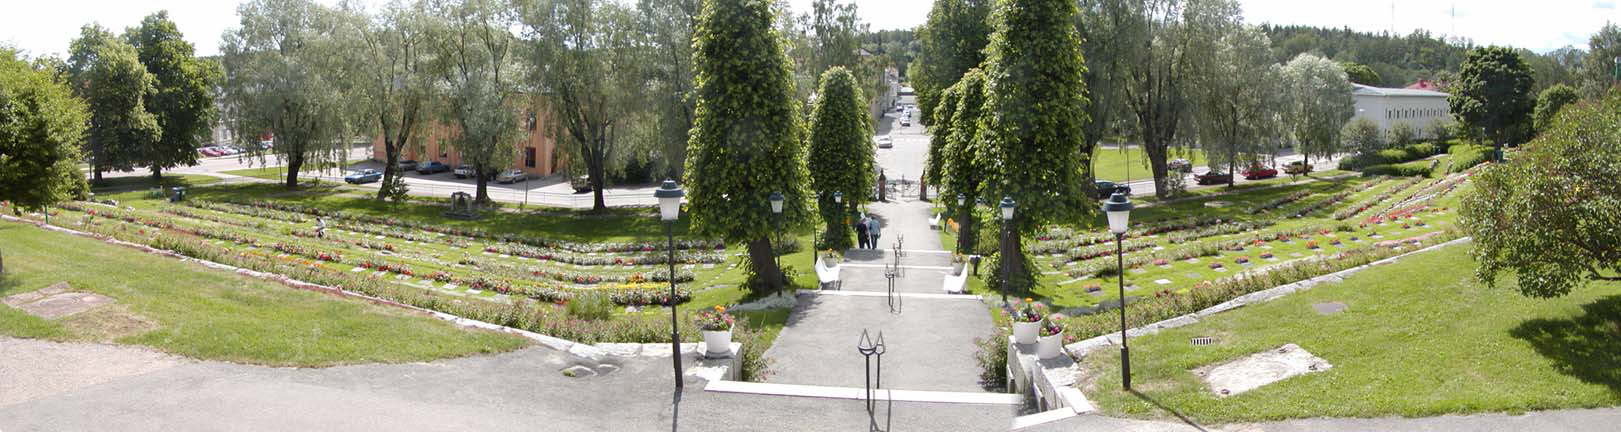 Soderhamn Church Garden - Sweden